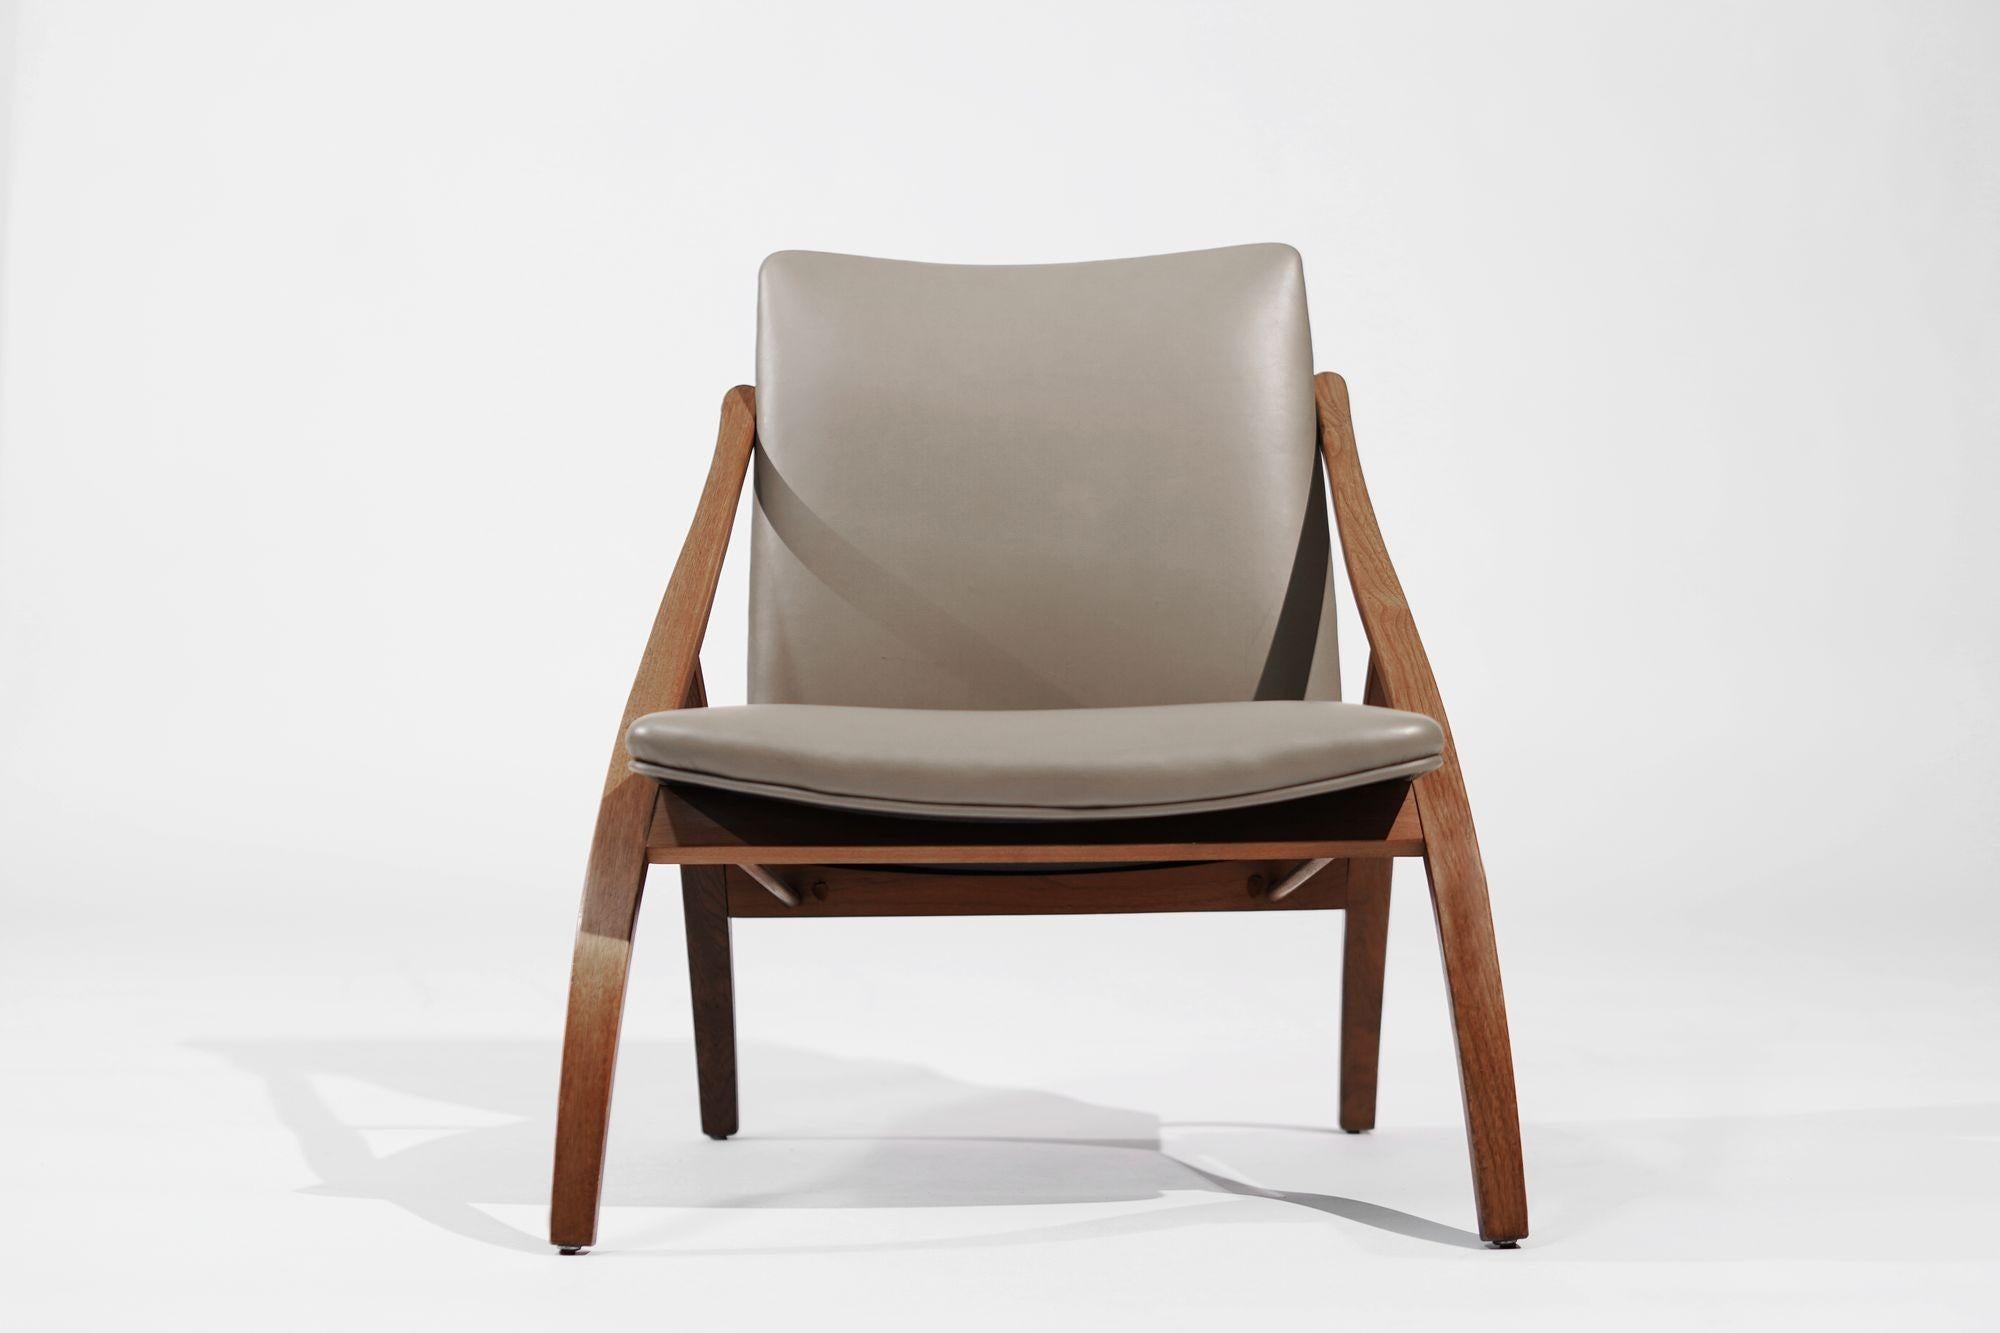 Faux Leather Sculptural Bent Teak Lounge Chair, Sweden, C. 1950s For Sale